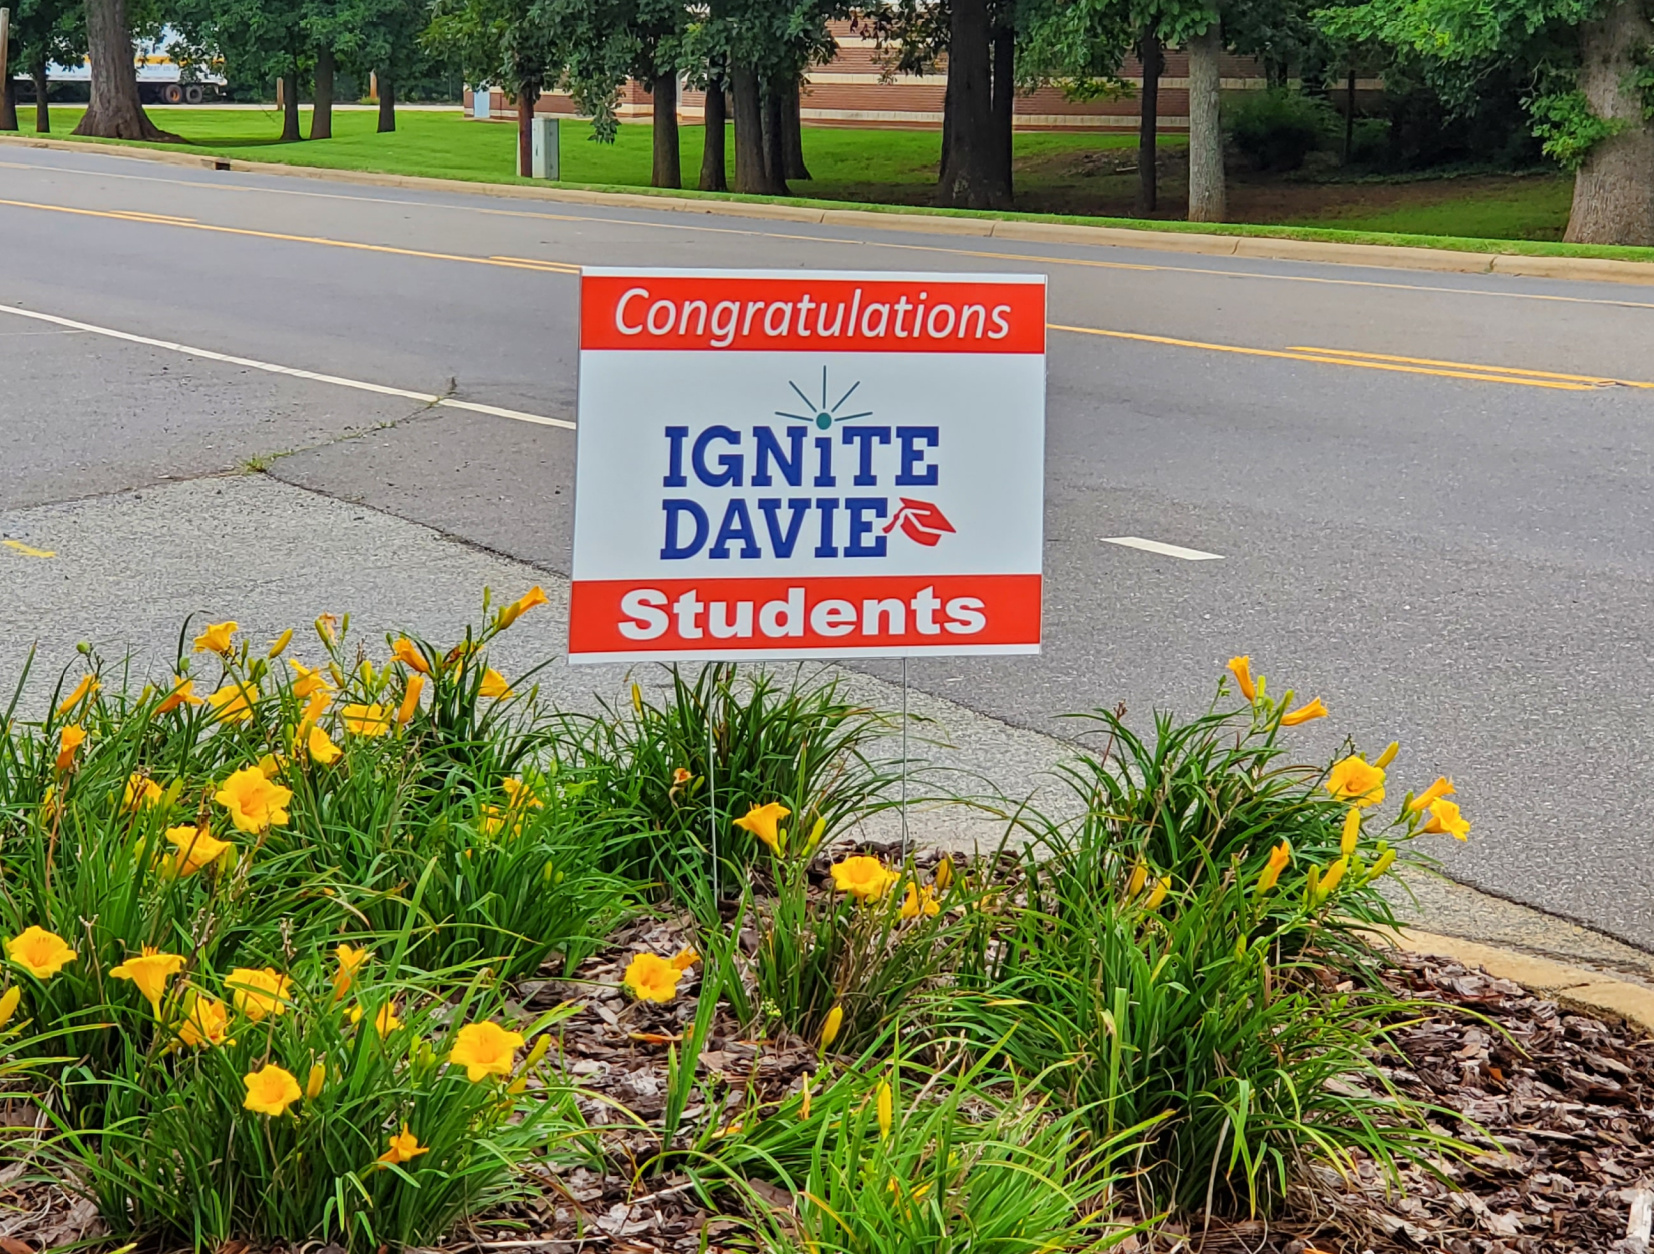 IGNITE DAVIE program provides college opportunities for Davie County Students